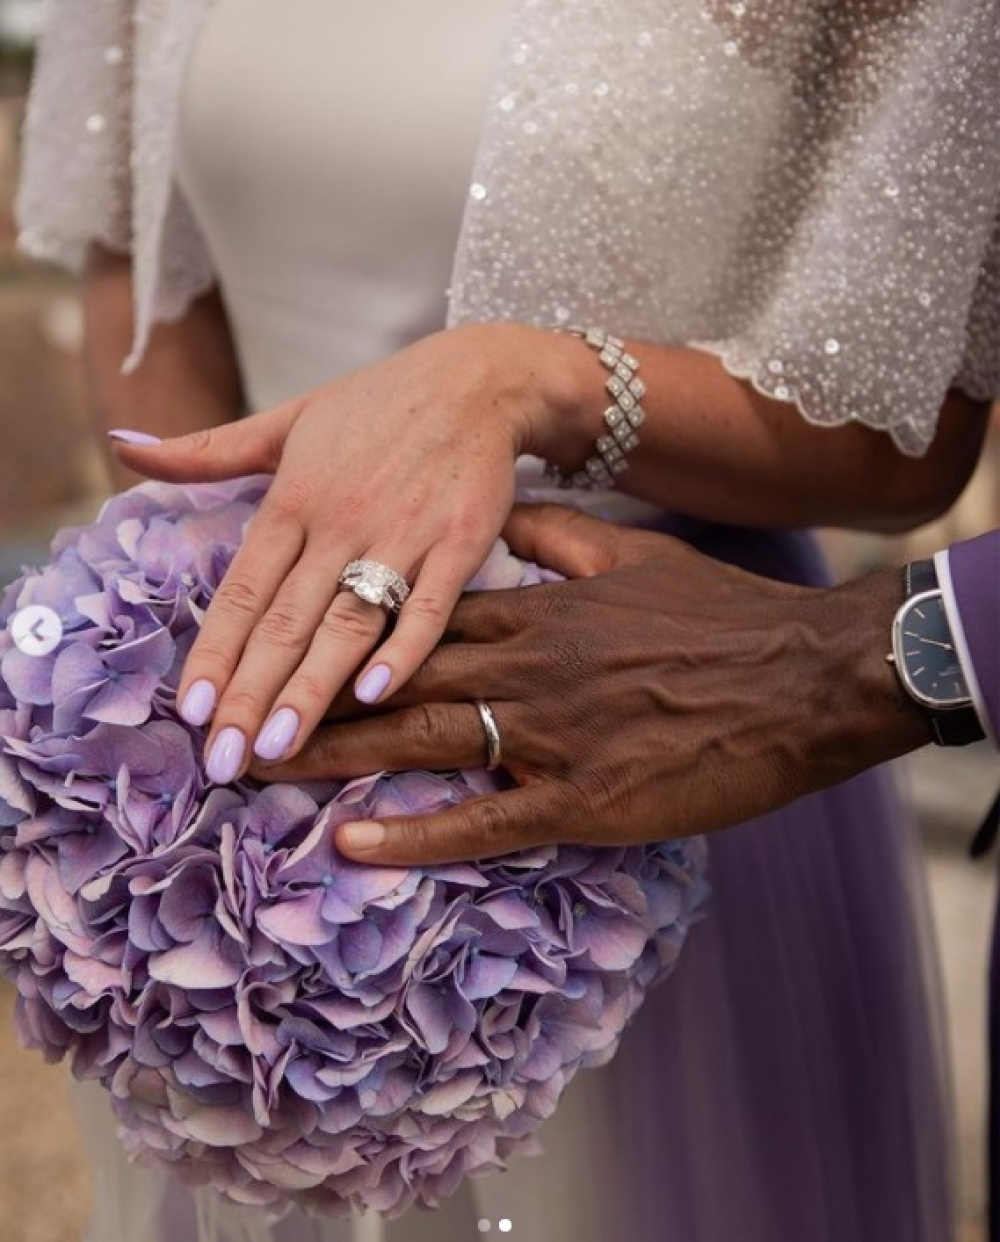 Свадьба Свитолиной и Монфиса. Фото: Instagram: instagram/elisvitolina